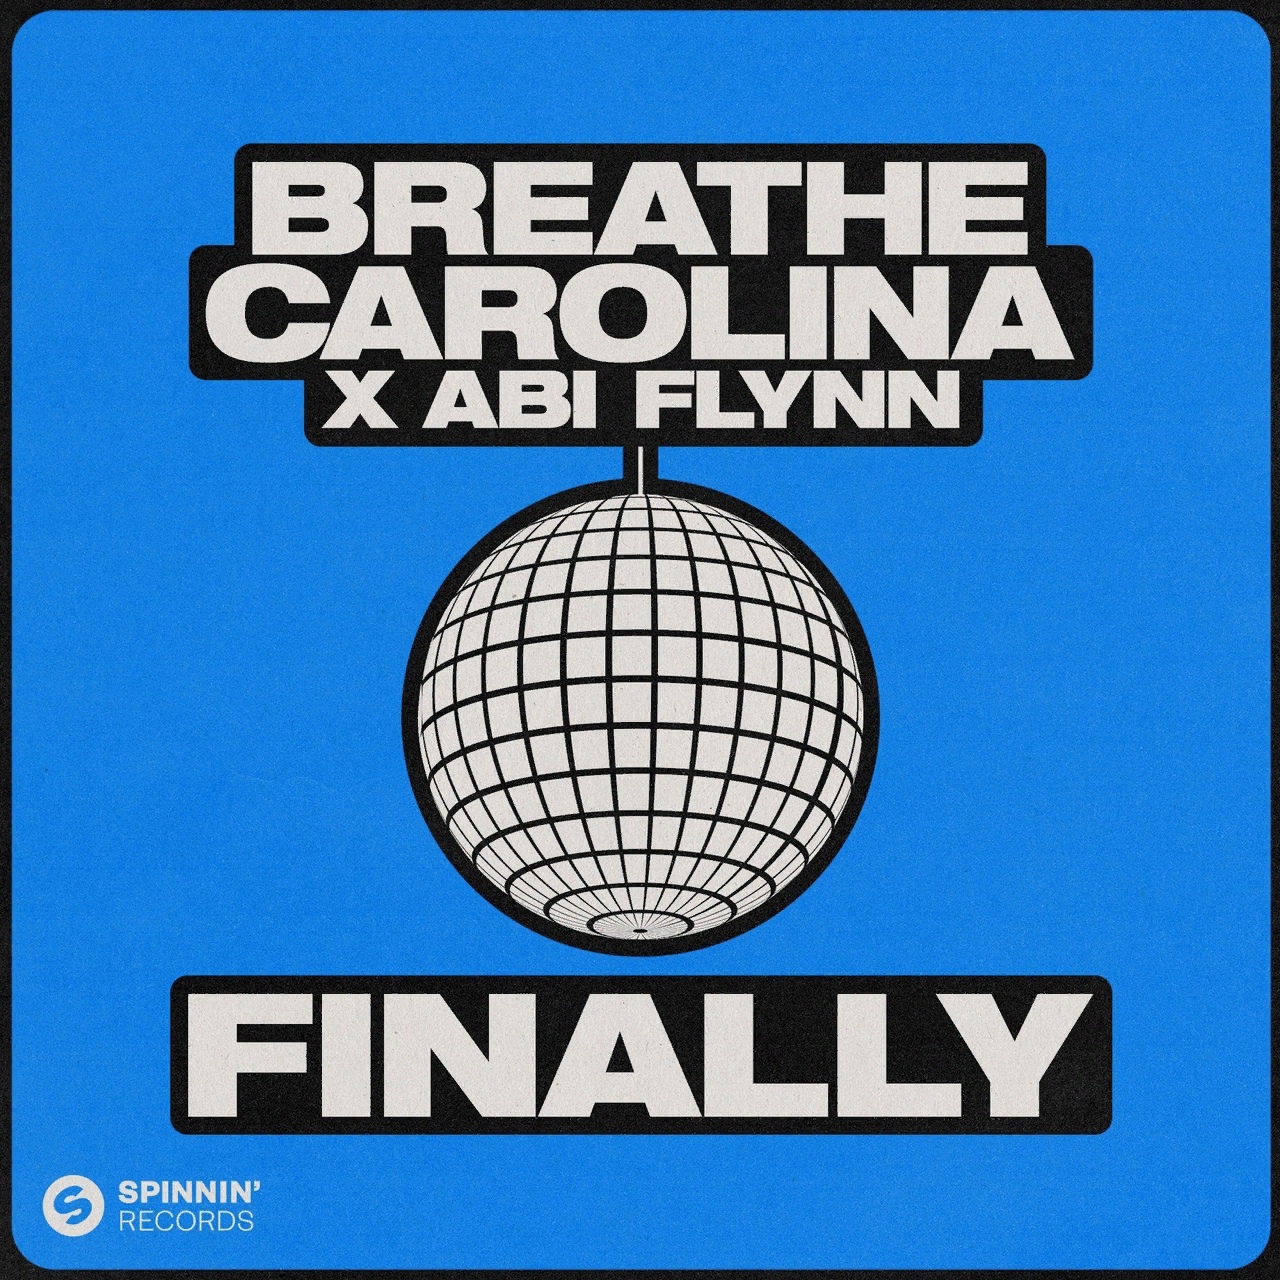 Breathe Carolina featuring Abi Flynn — Finally cover artwork